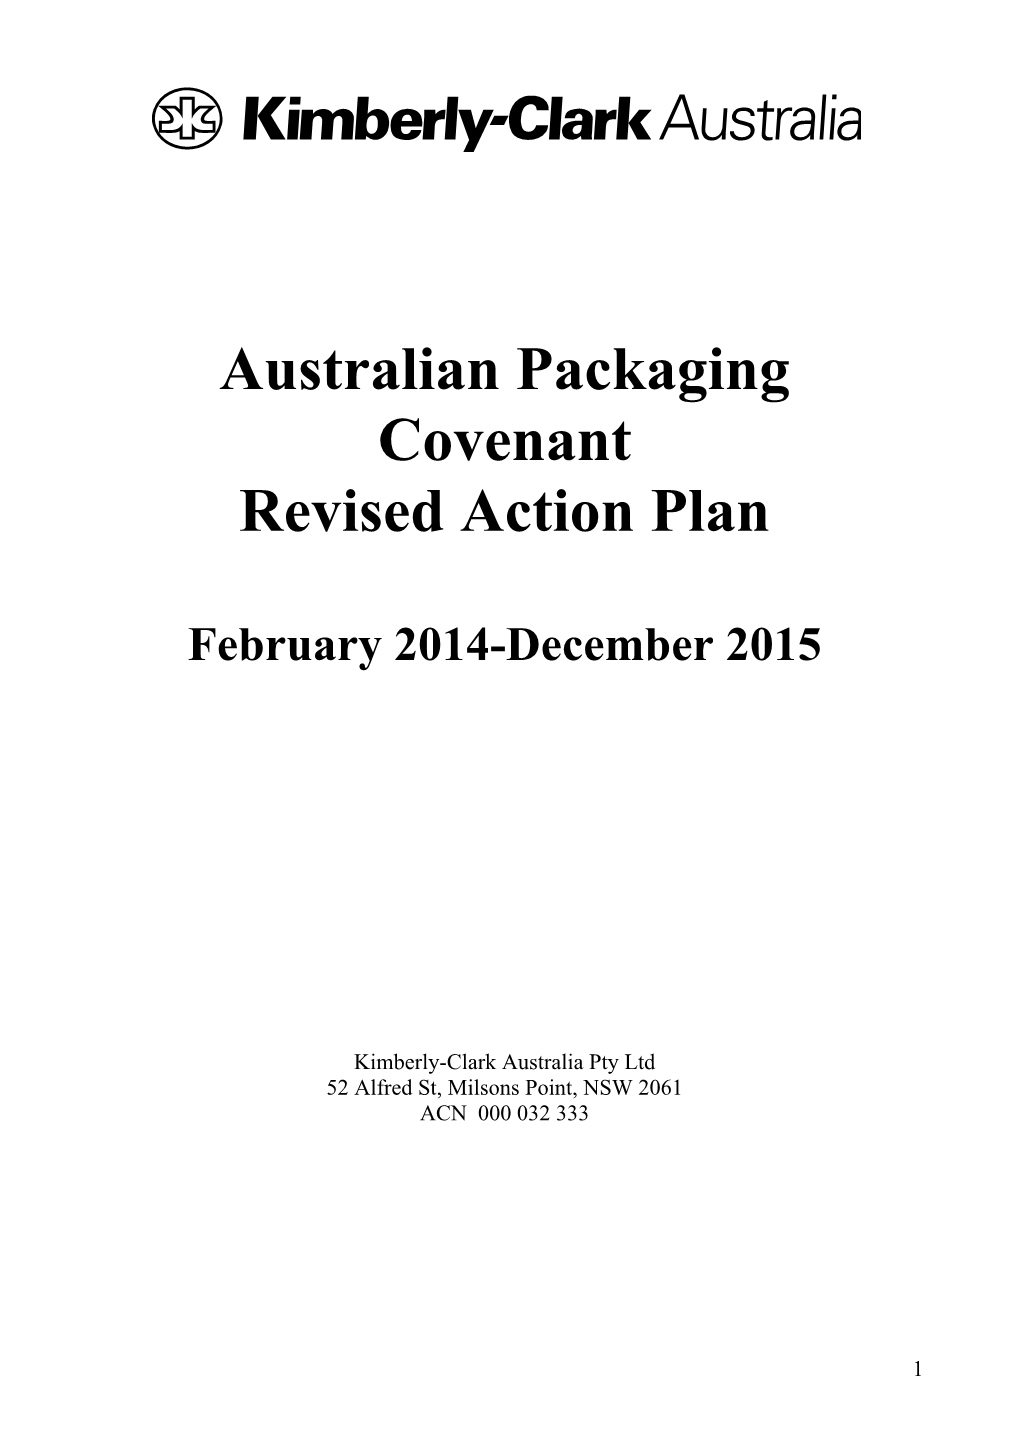 Australian Packaging Covenant Revised Action Plan